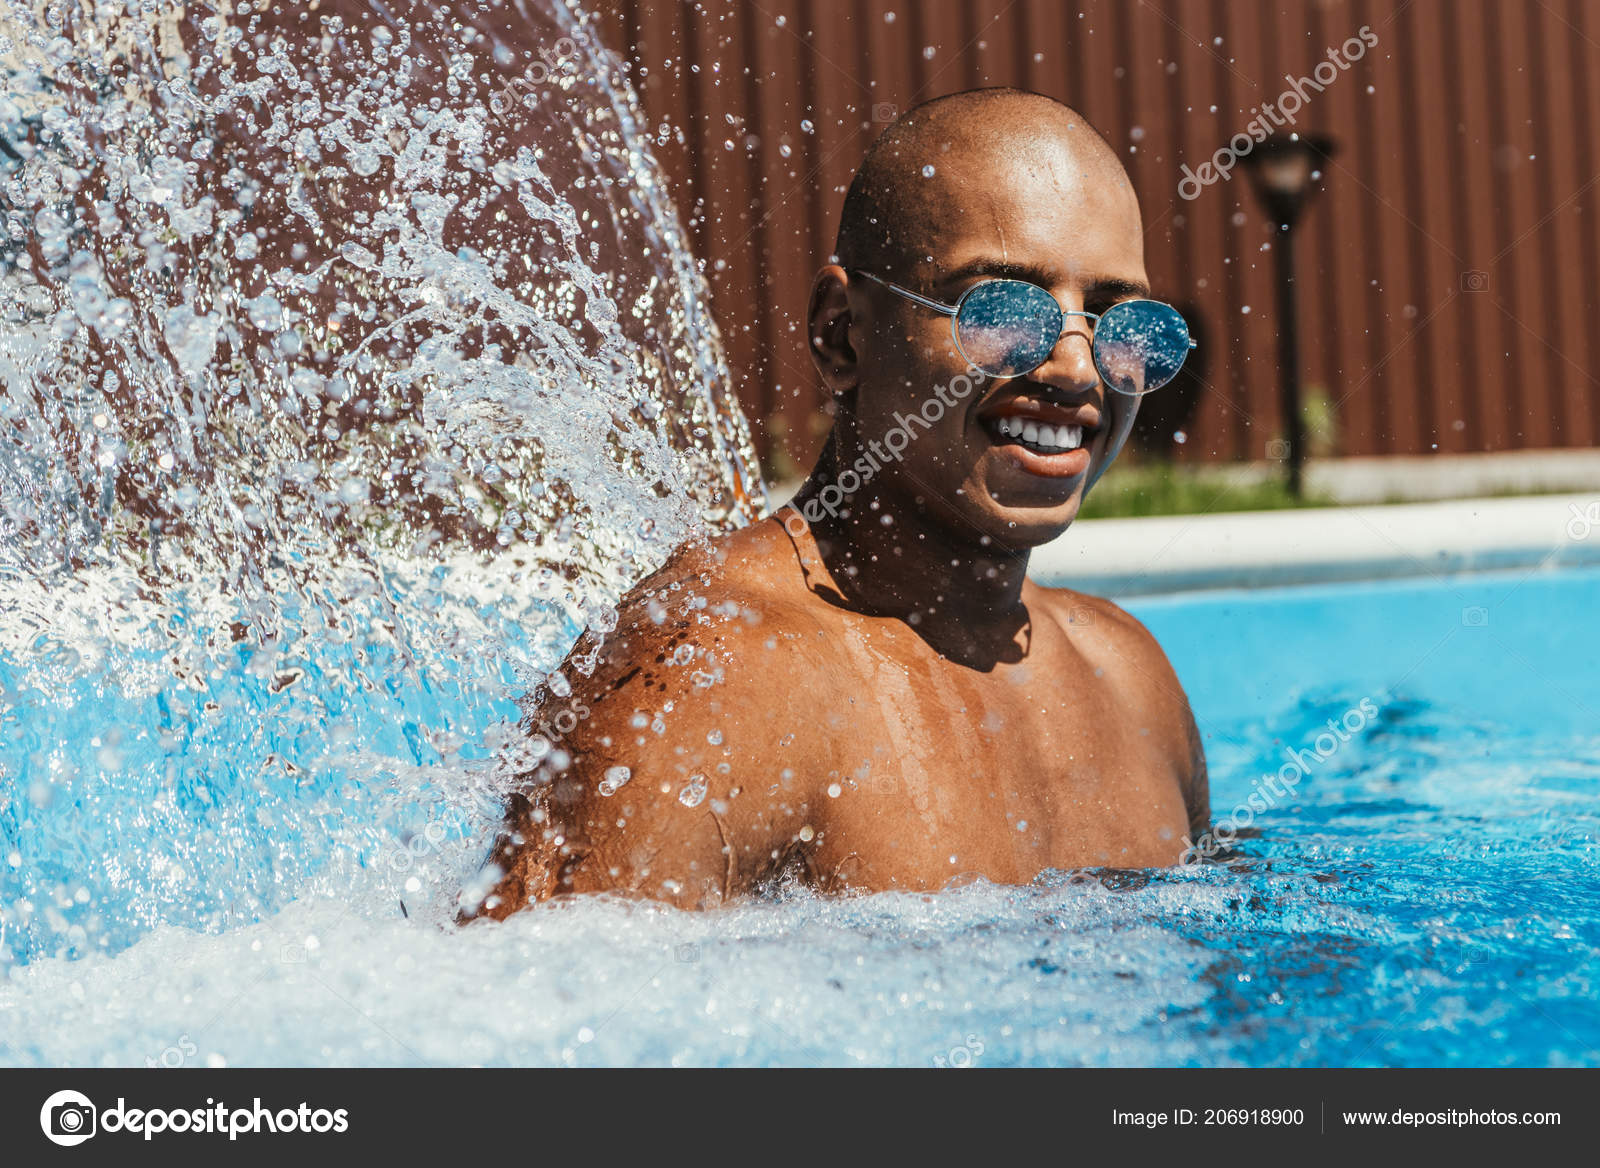 https://st4.depositphotos.com/12985790/20691/i/1600/depositphotos_206918900-stock-photo-smiling-african-american-man-sunglasses.jpg